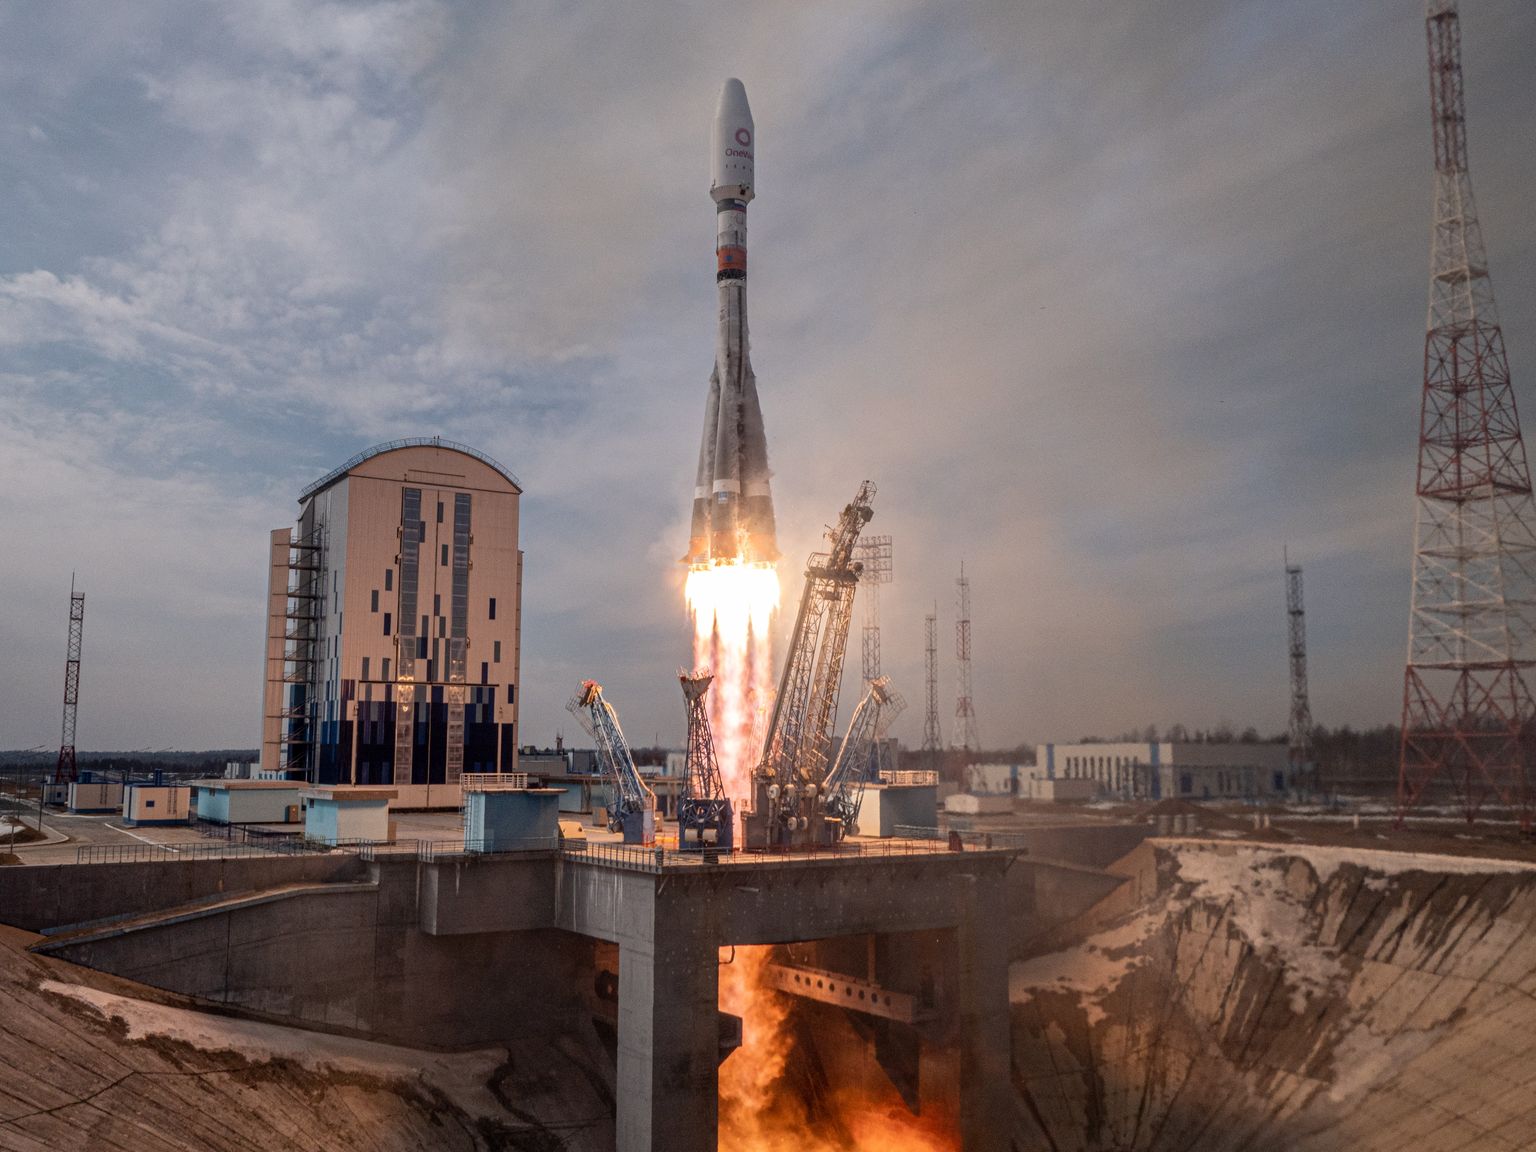 Vene kanderakett Sojuz-2.1b startimas Vostotšnõi kosmodroomilt.